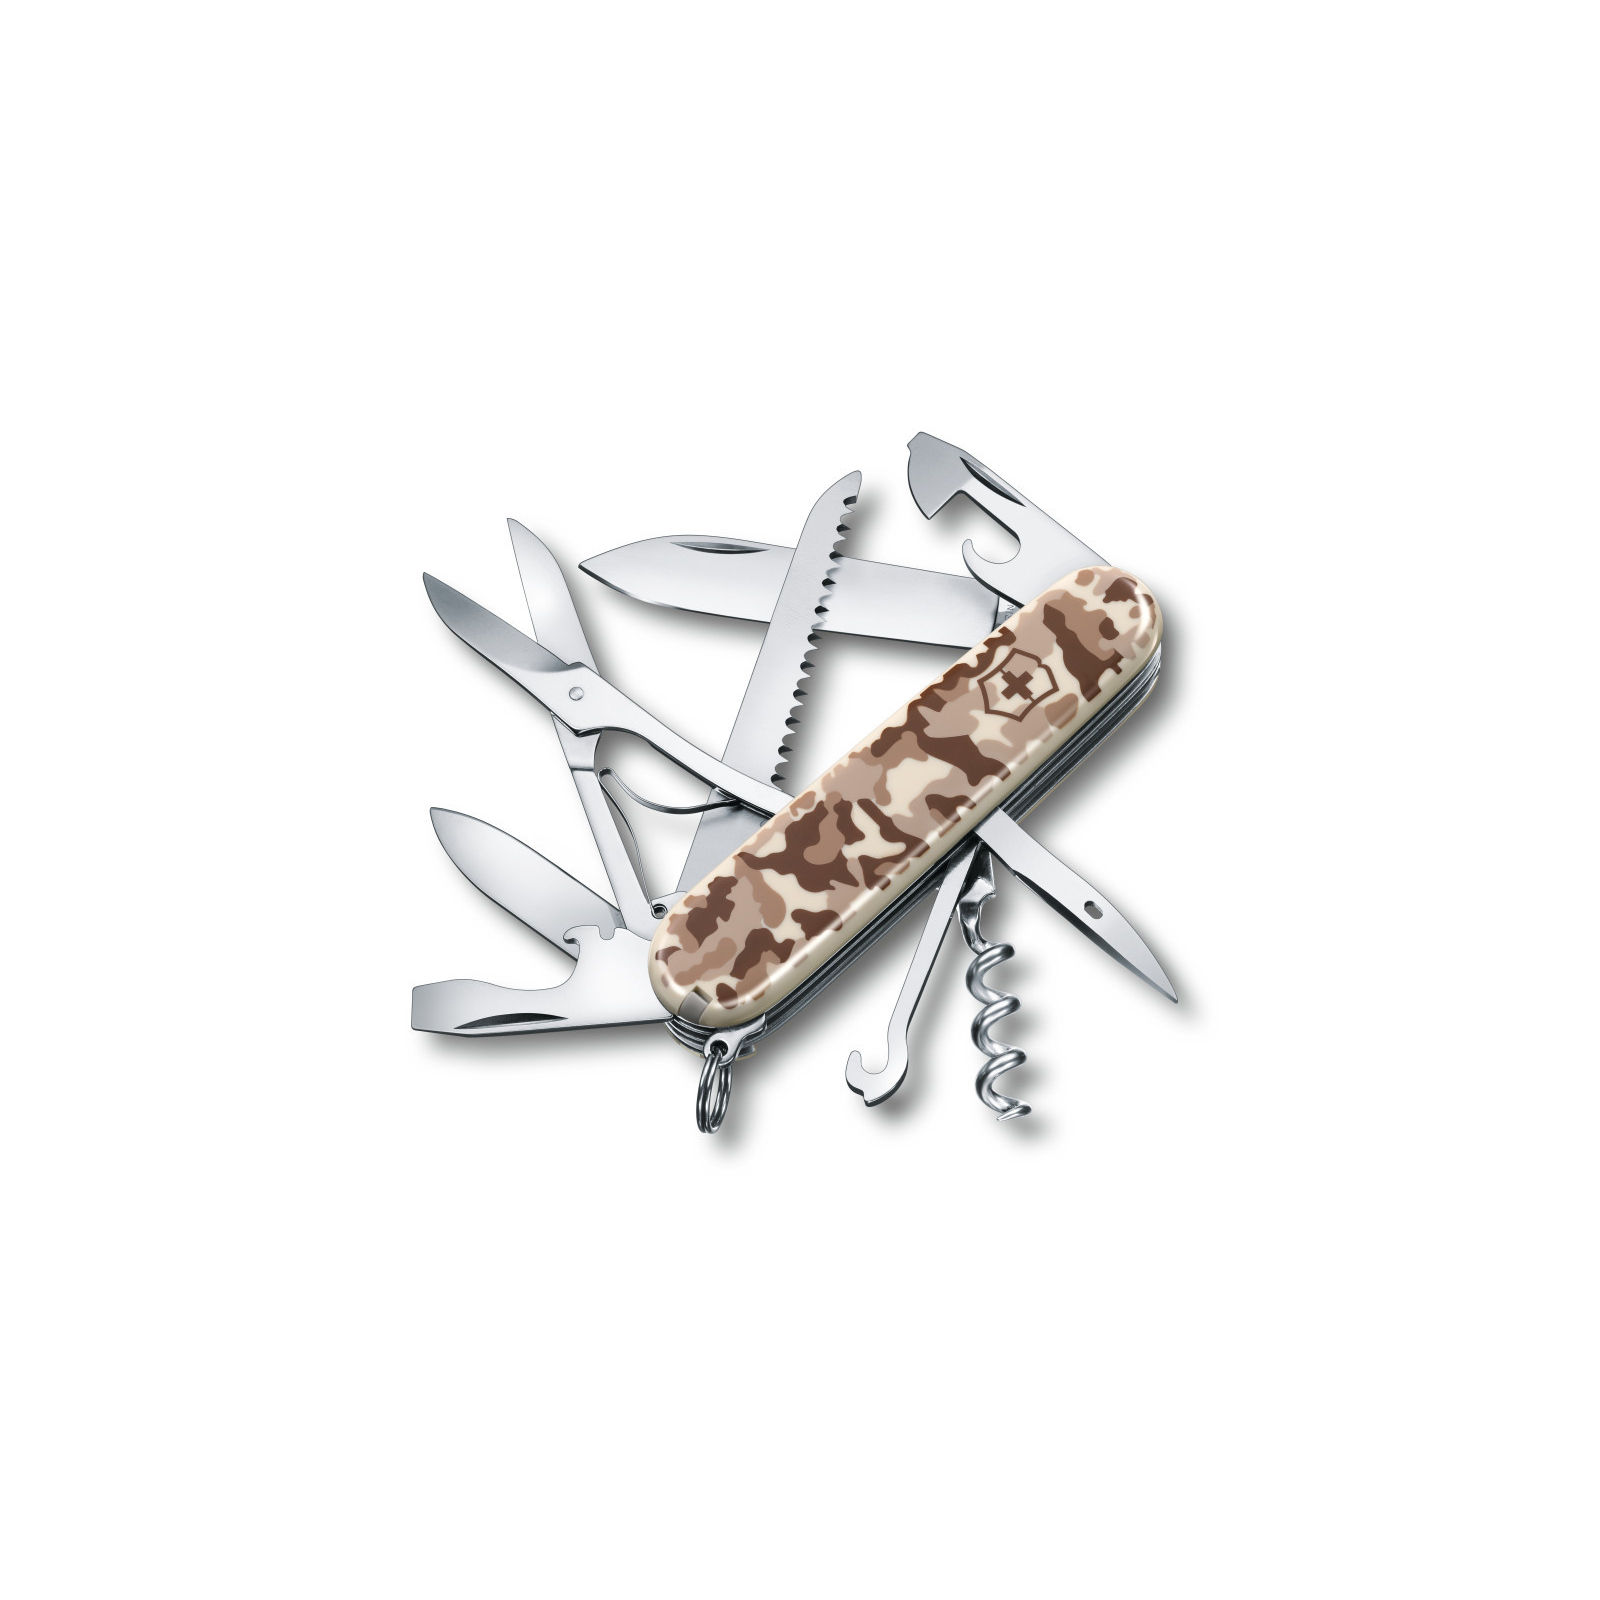 Нож Victorinox Swiss Army Huntsman пустынный камуфляж (1.3713.941)